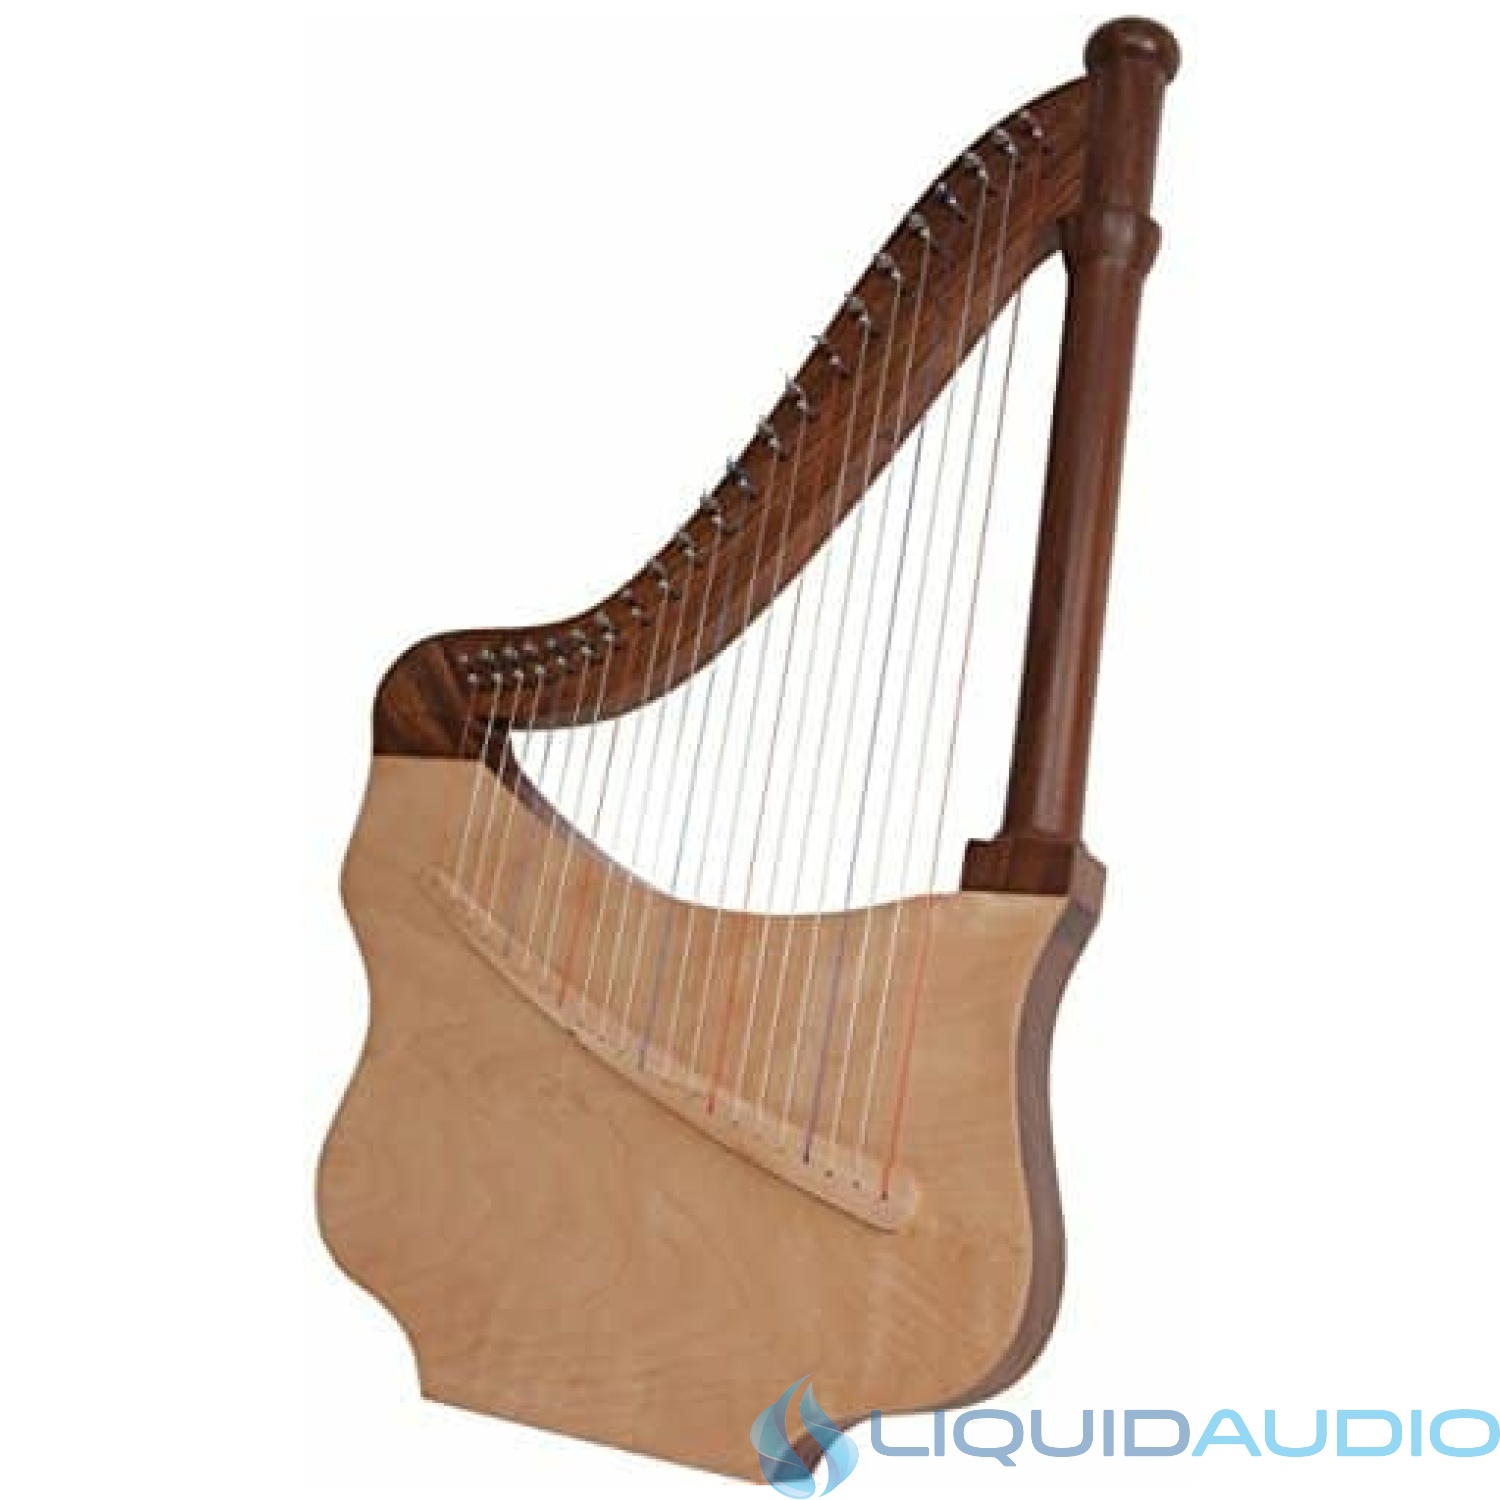 Roosebeck Lute Harp